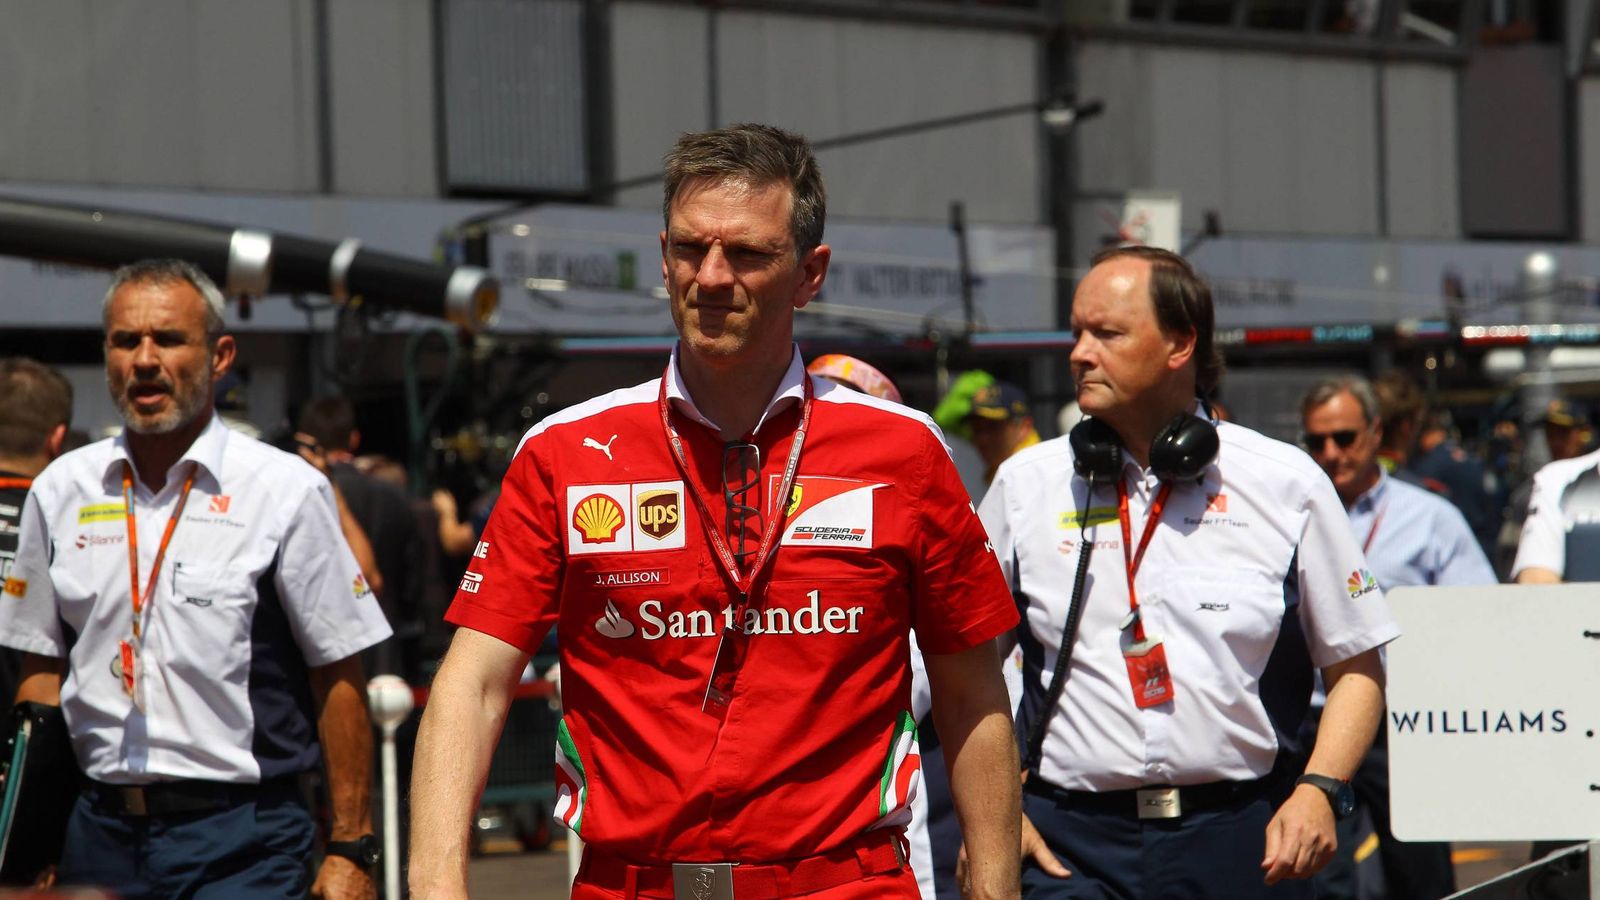 Foto: James Allison, exdirector técnico de Scuderia Ferrari, el GP de Mónaco de este año.